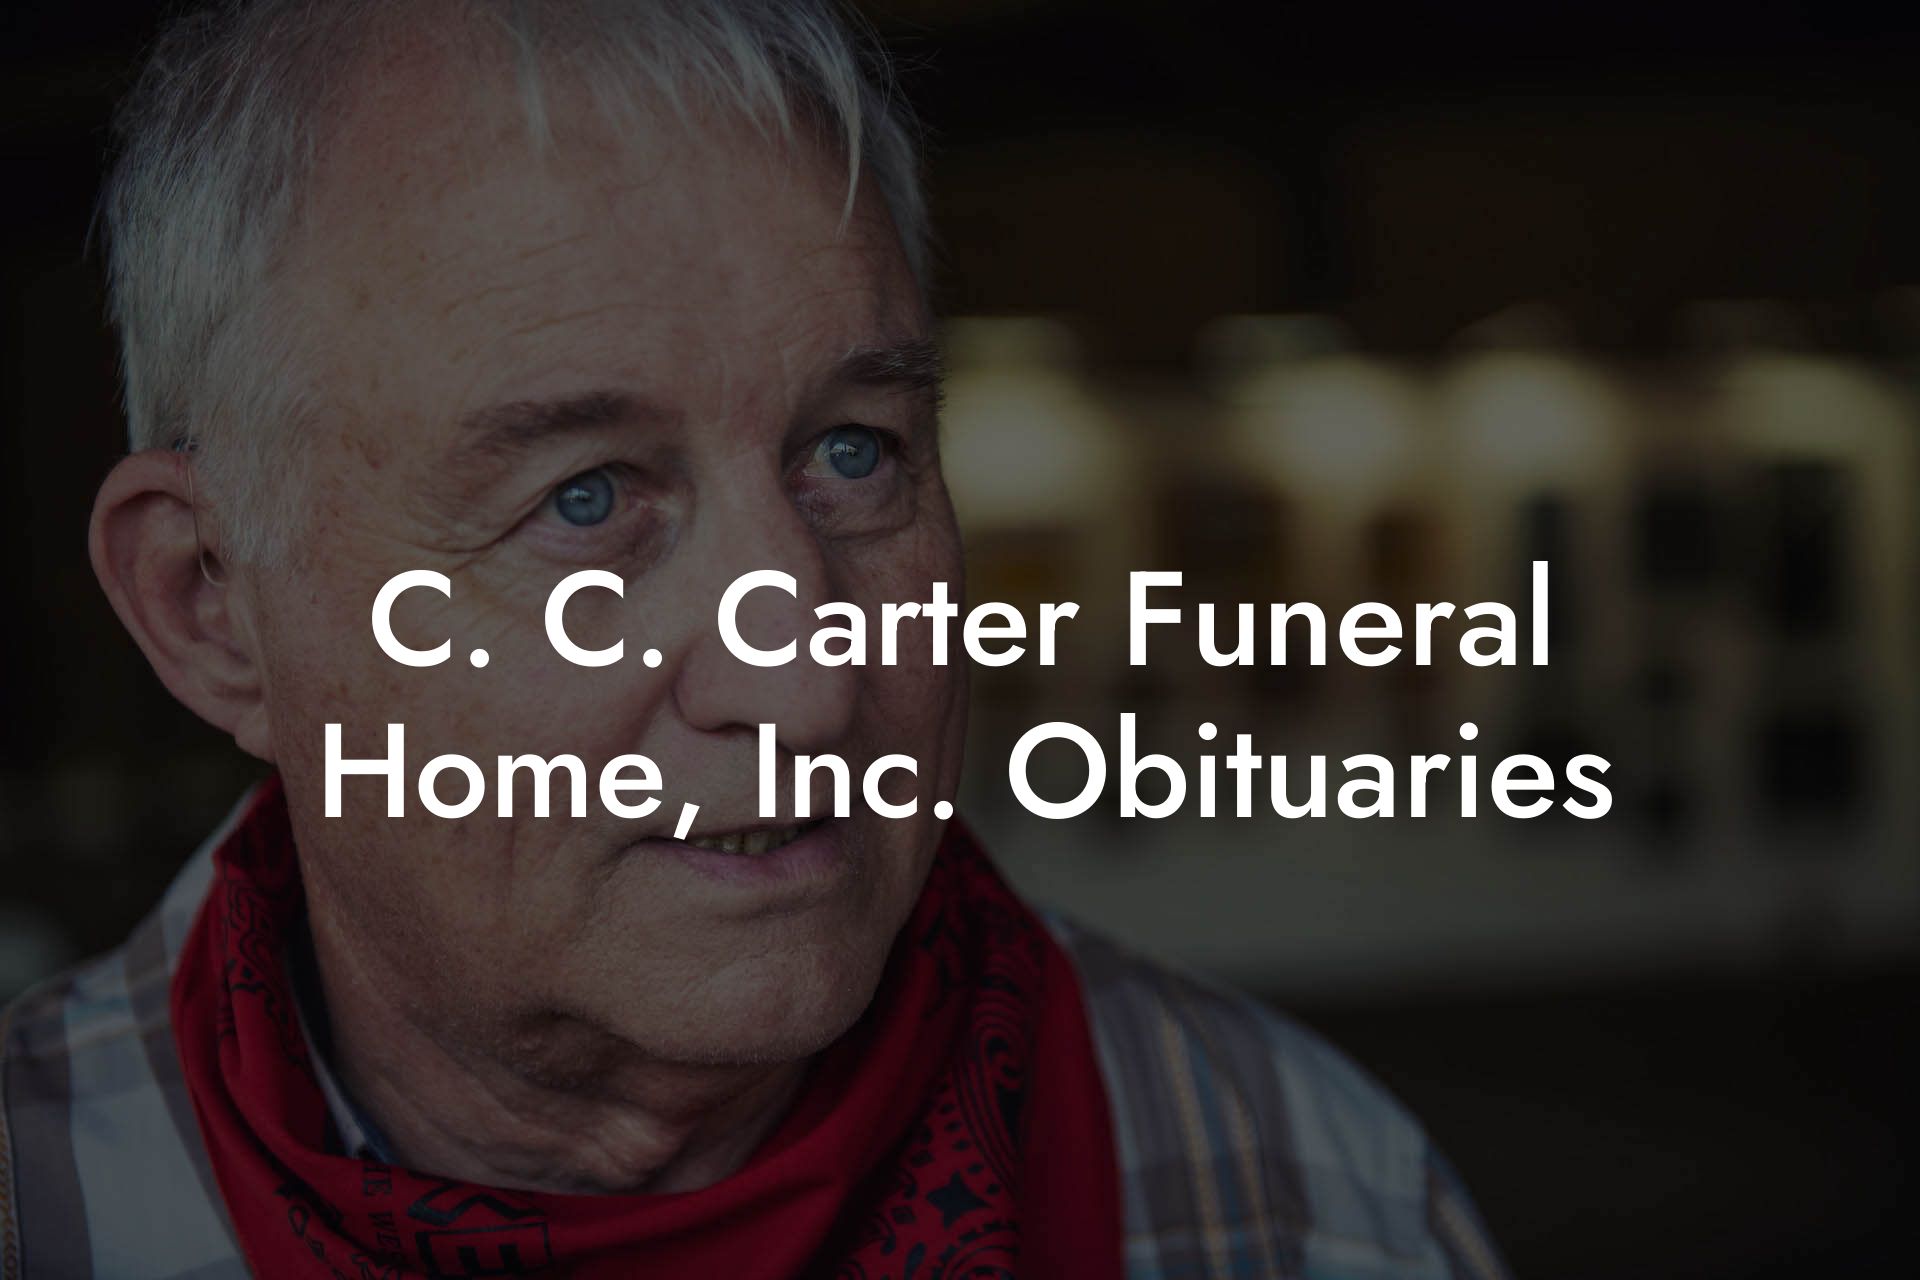 C. C. Carter Funeral Home, Inc. Obituaries